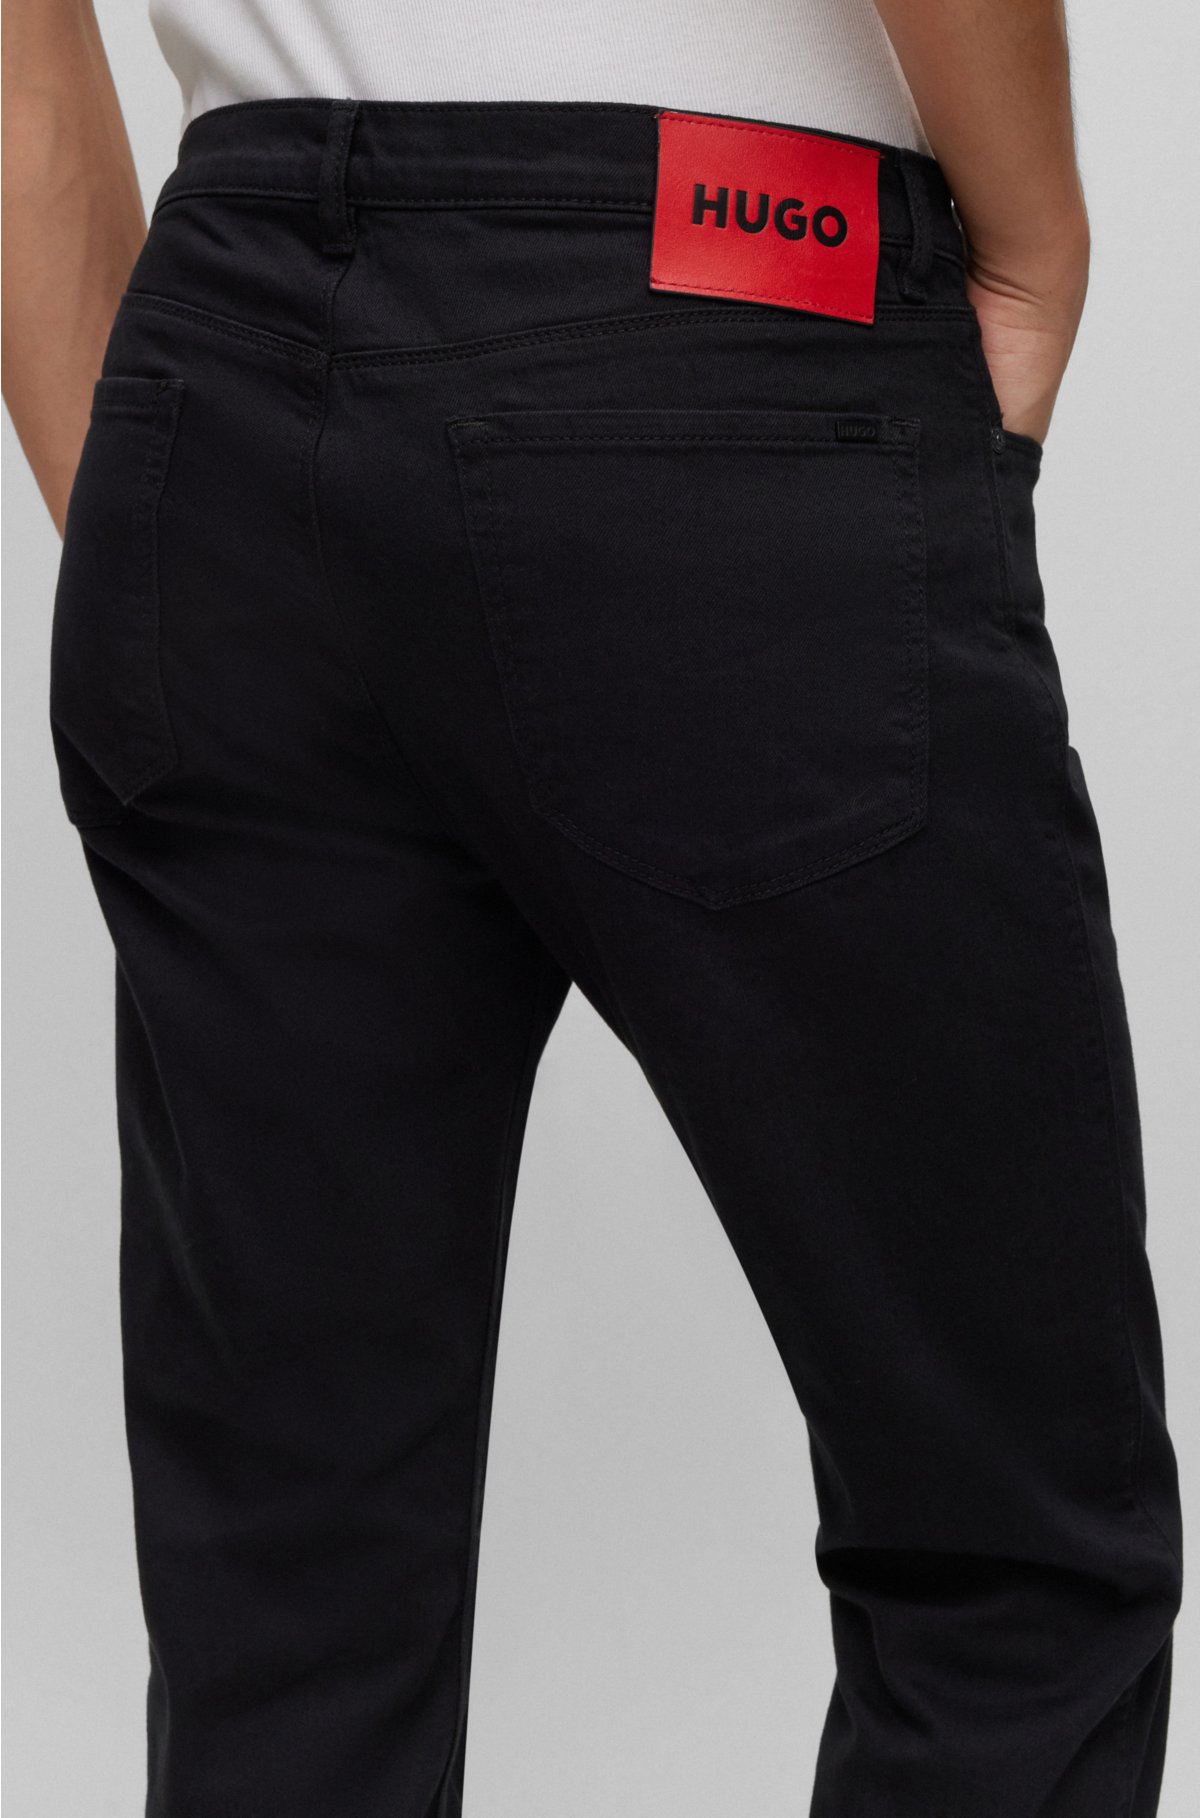 HUGO - Slim-fit jeans in black comfort-stretch denim